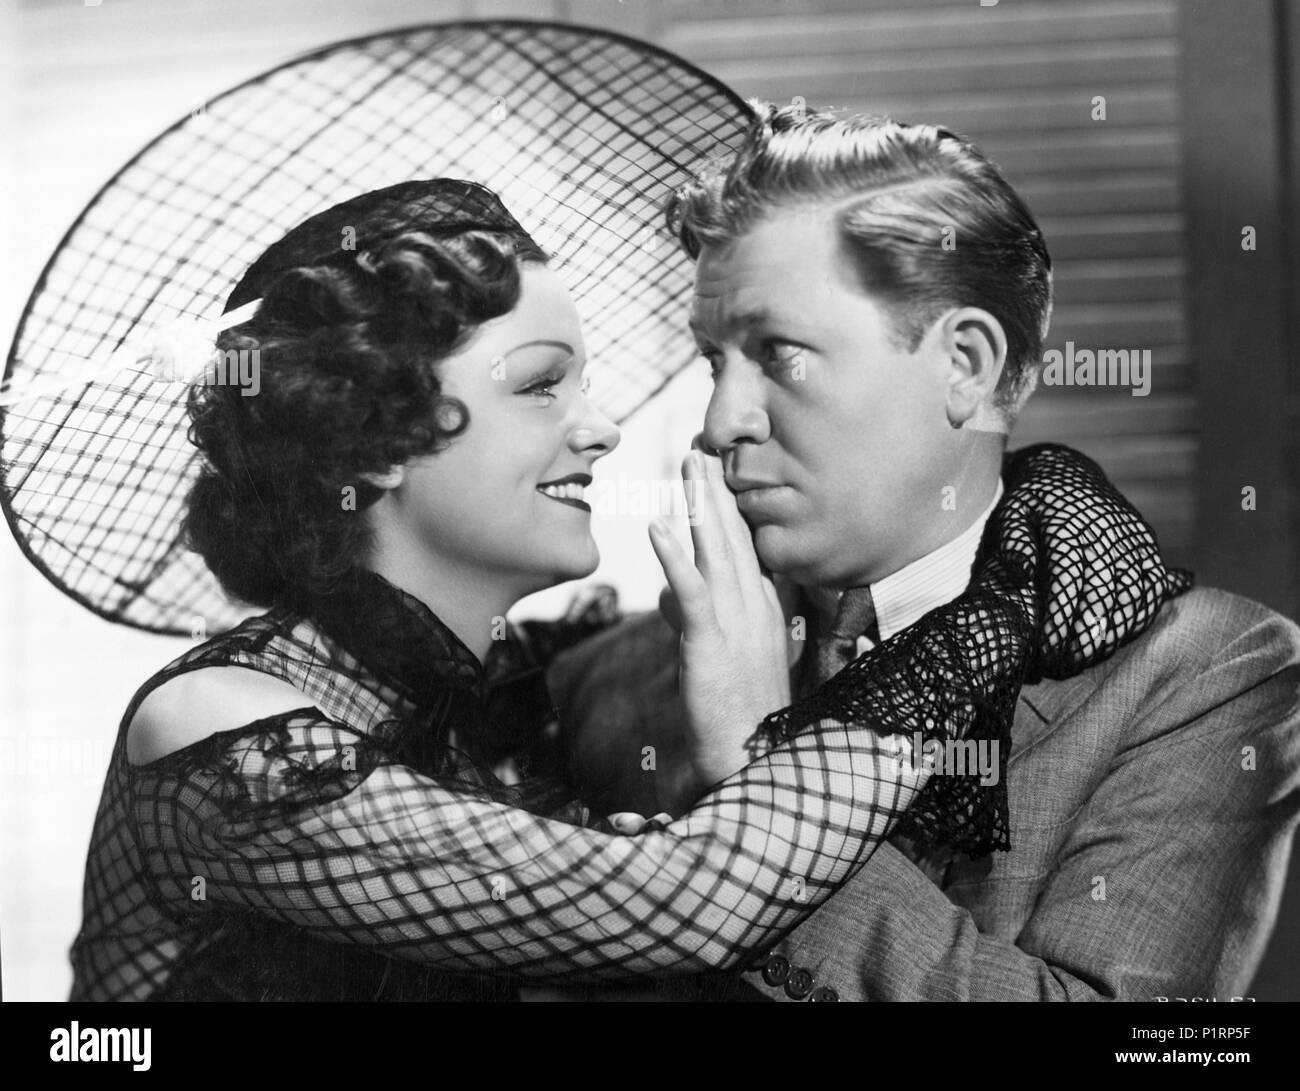 Original Film Title: BANCHELOR BAIT.  English Title: BANCHELOR BAIT.  Film Director: GEORGE STEVENS.  Year: 1934.  Stars: STUART ERWIN; PERT KELTON. Credit: RKO / Album Stock Photo